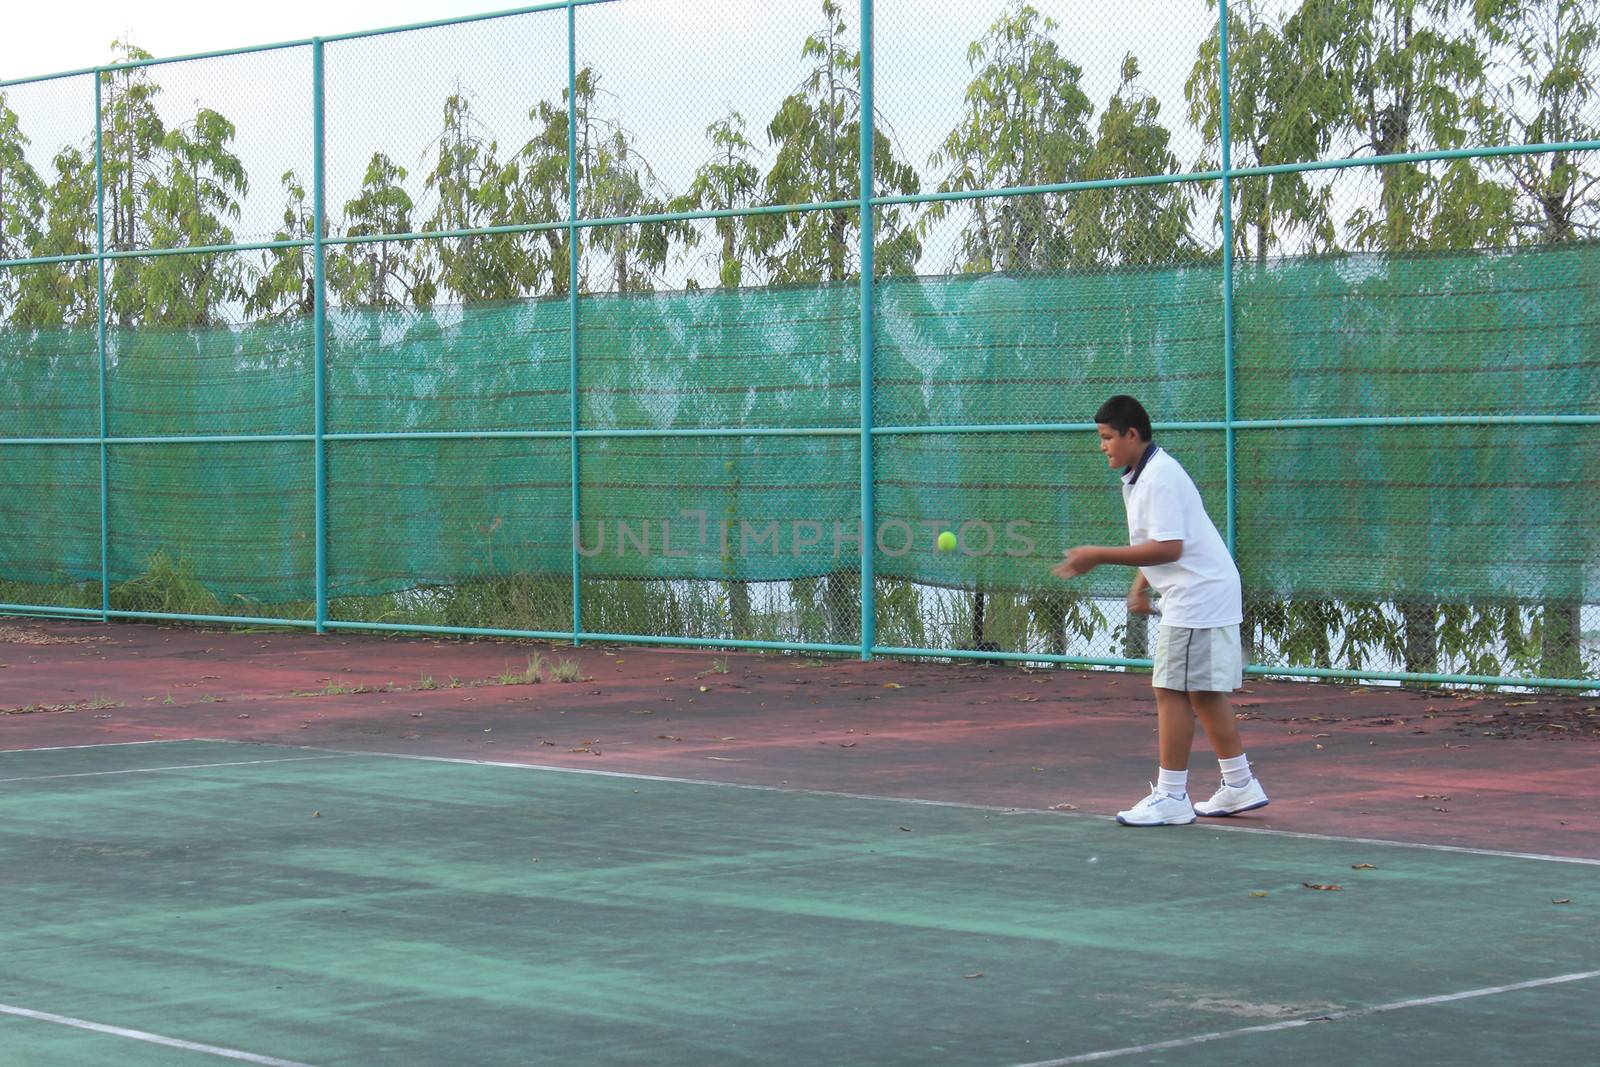 Thai young tennis player hit the tennis ball